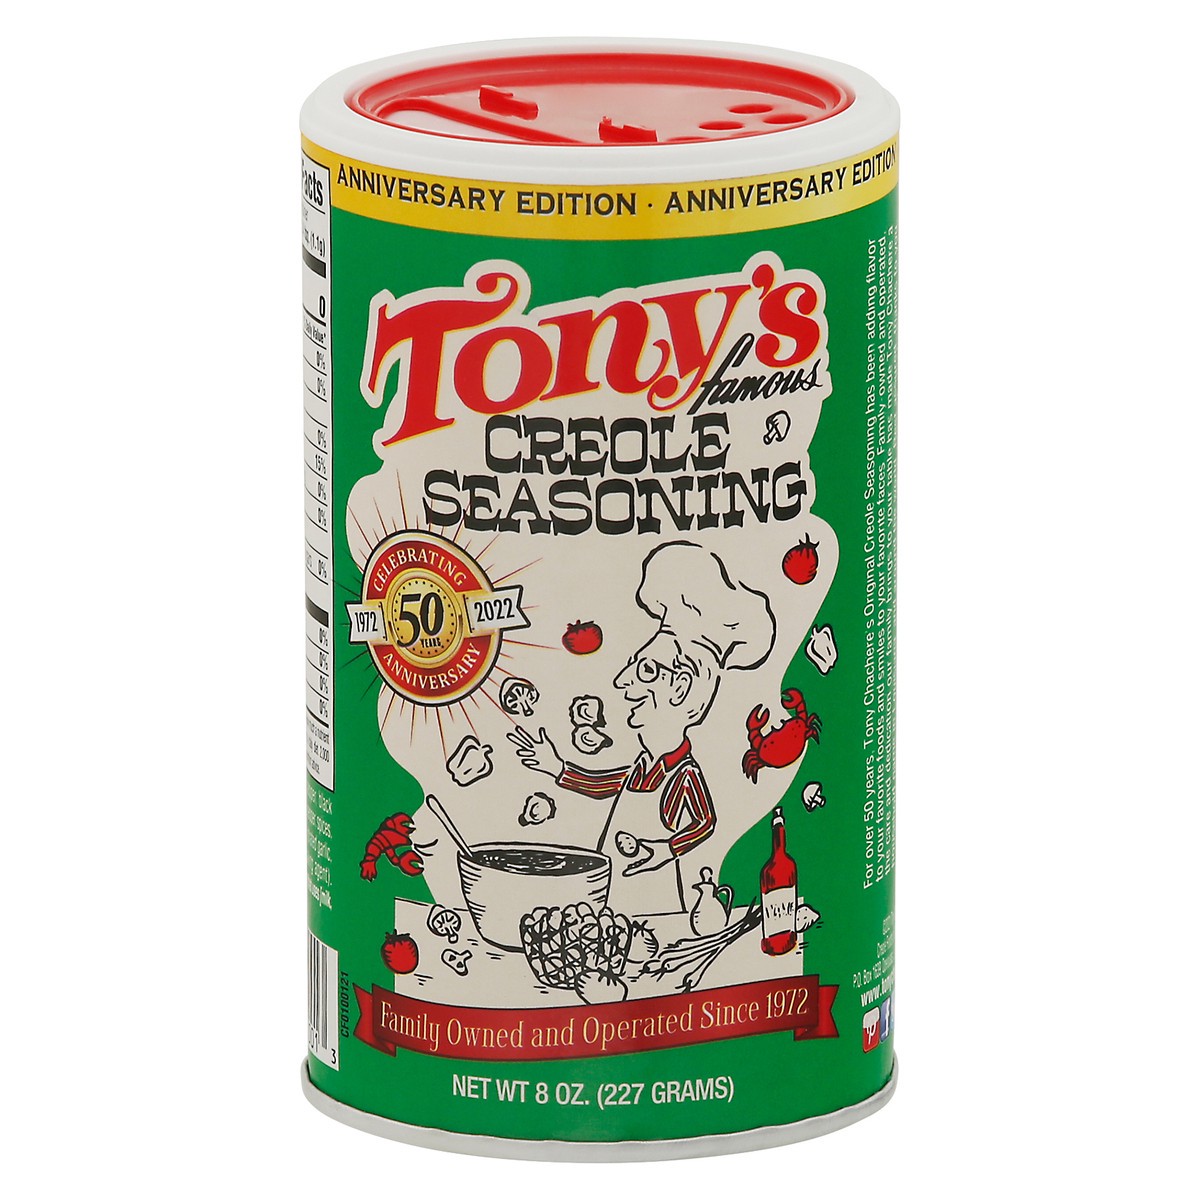 Tony Chachere's Original Creole Seasoning 8 oz